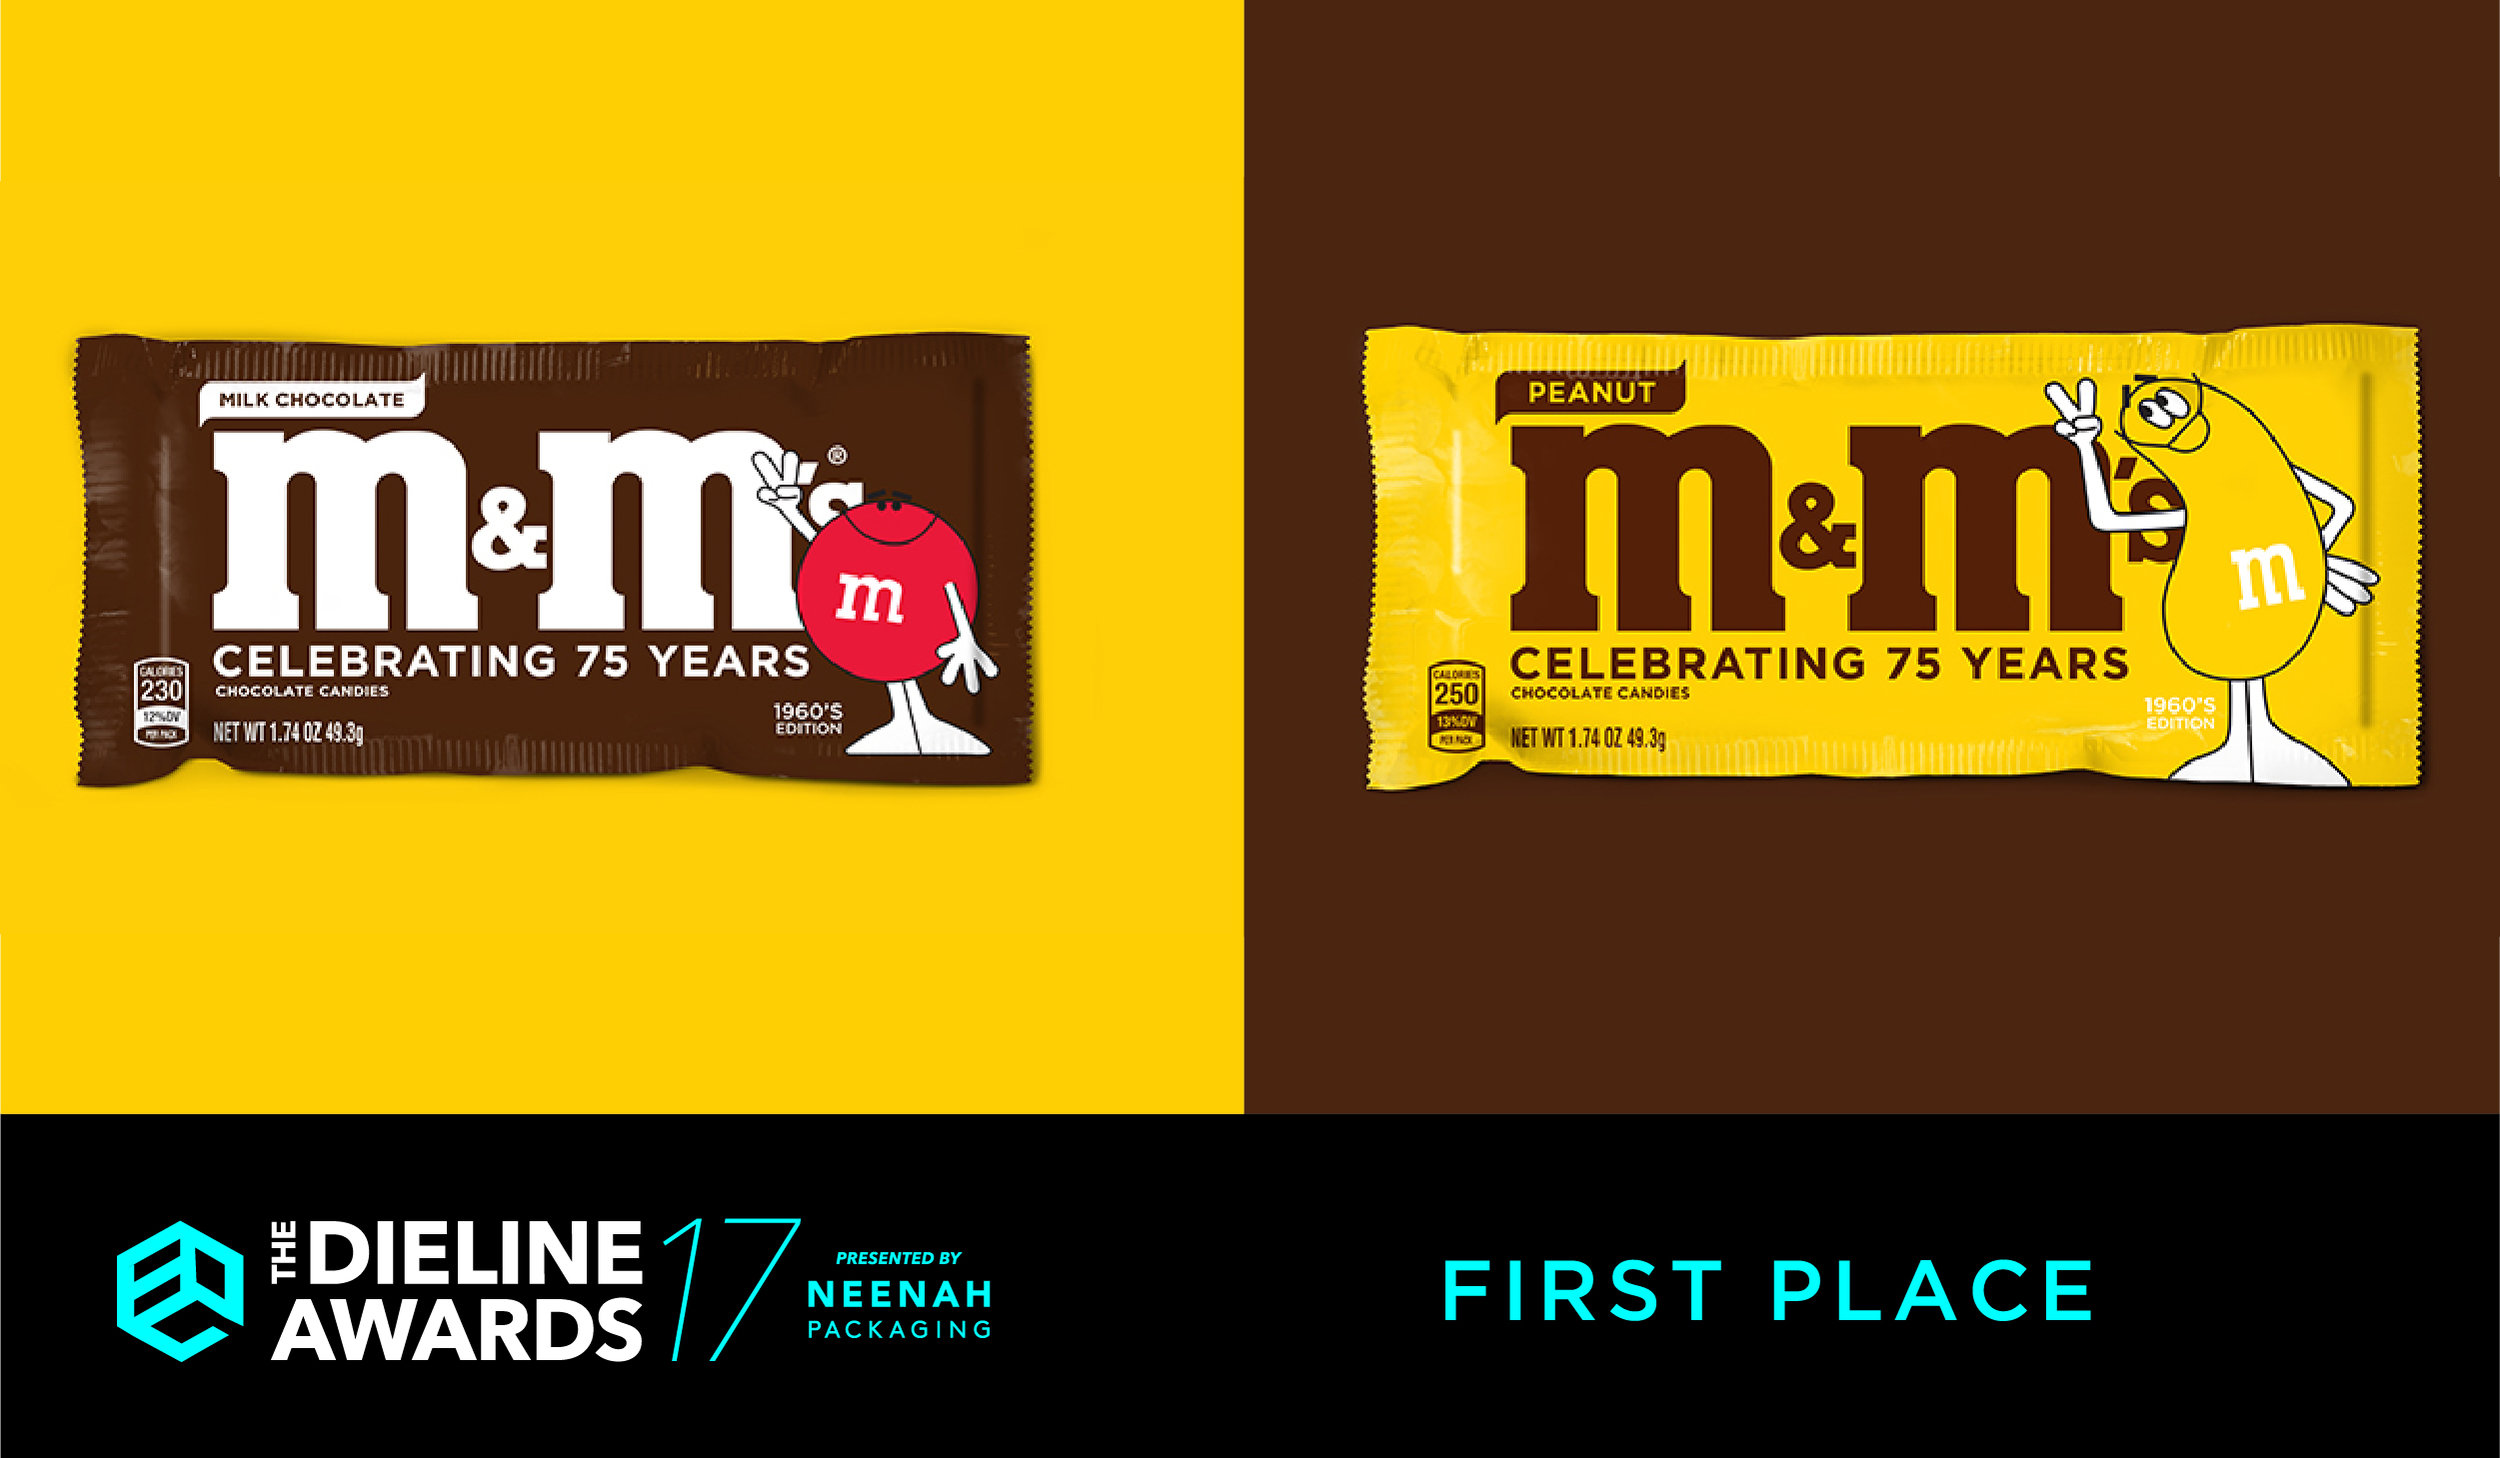 The Dieline Awards 2017: M&M’S 75th Anniversary